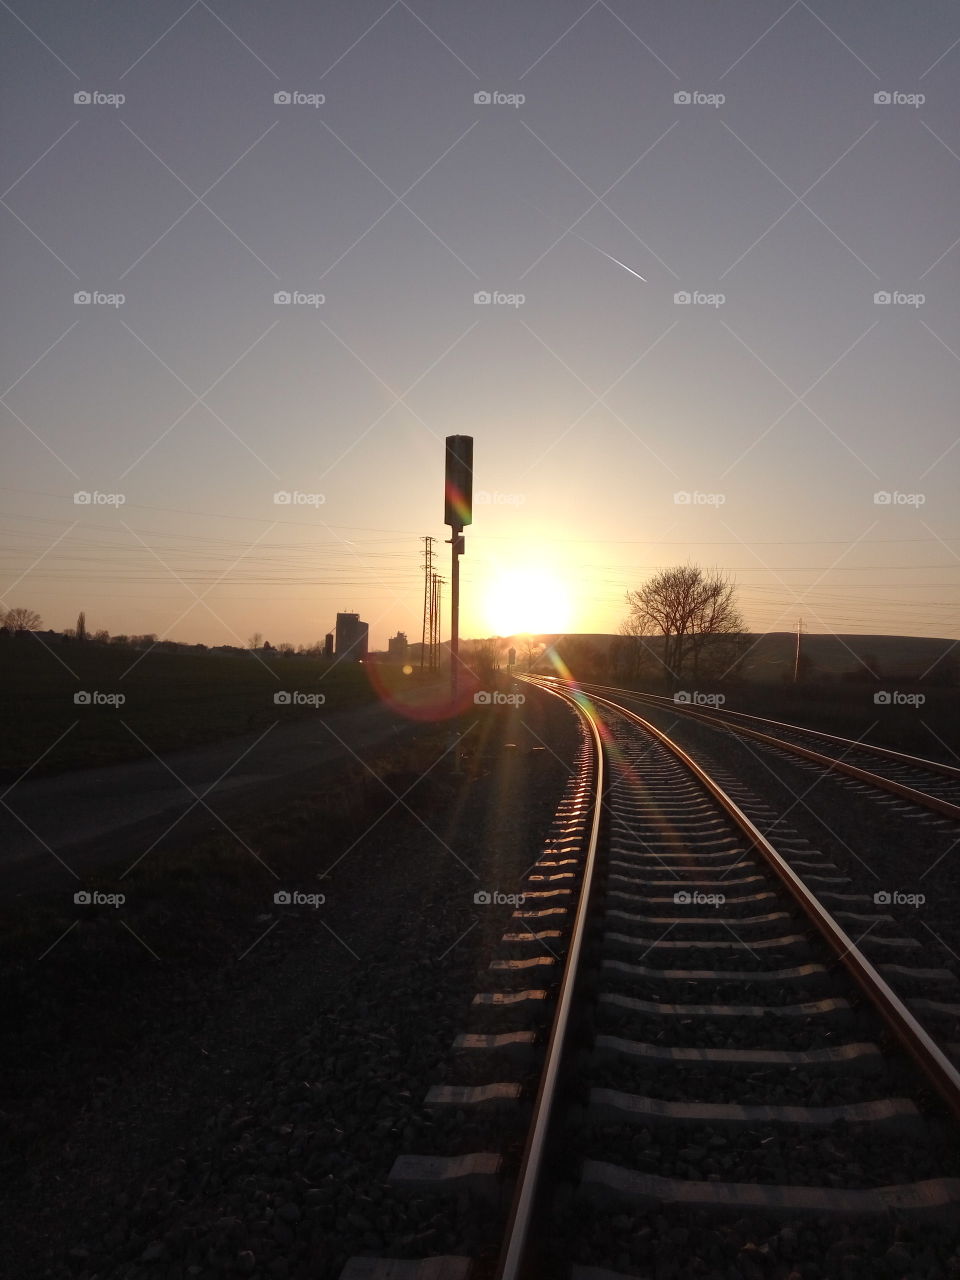 Railroad in sunset